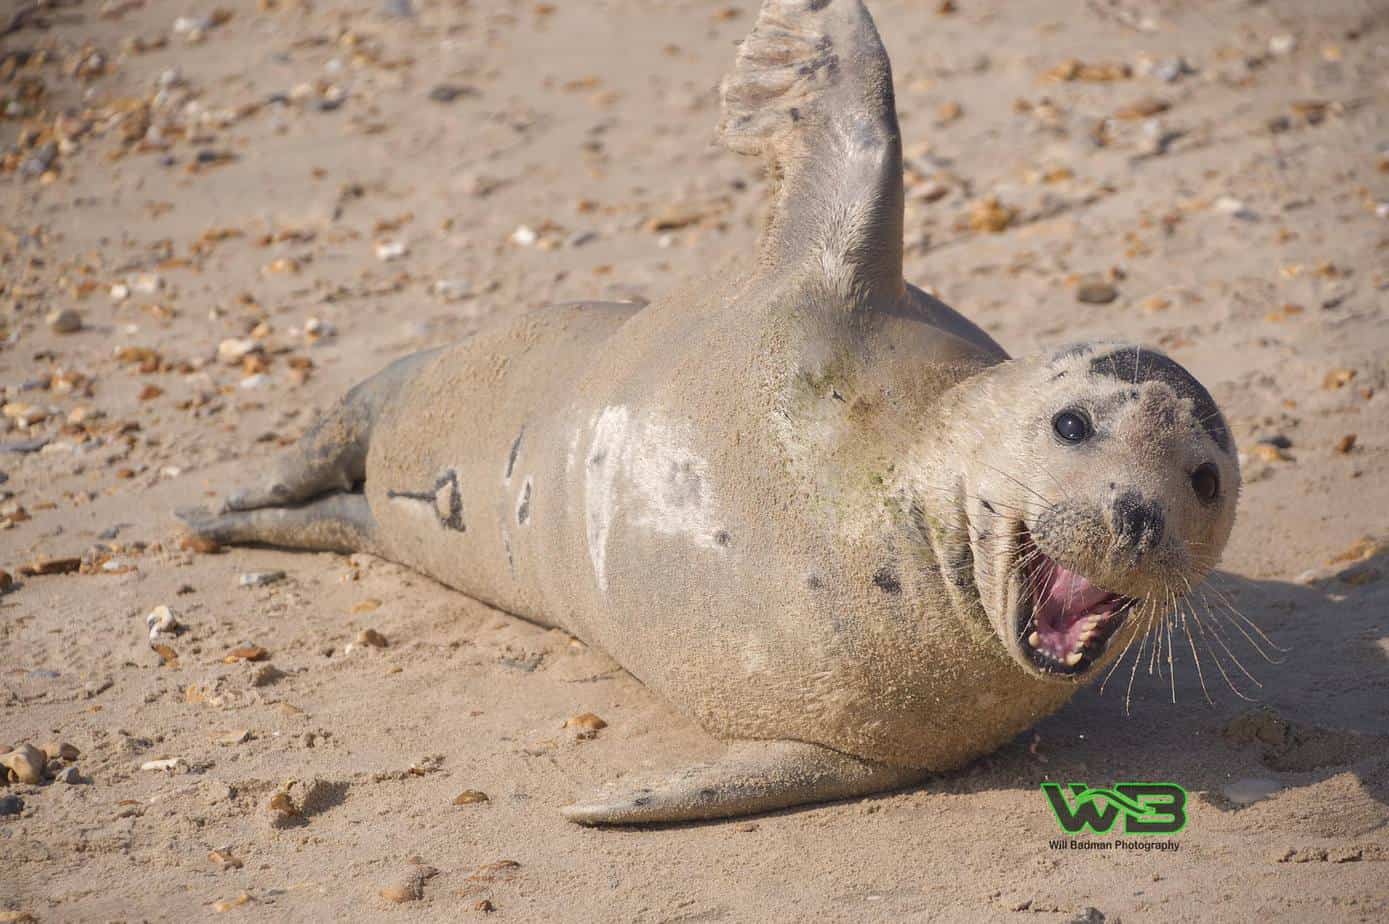 Sammy the friendly seal at Weymouth beach